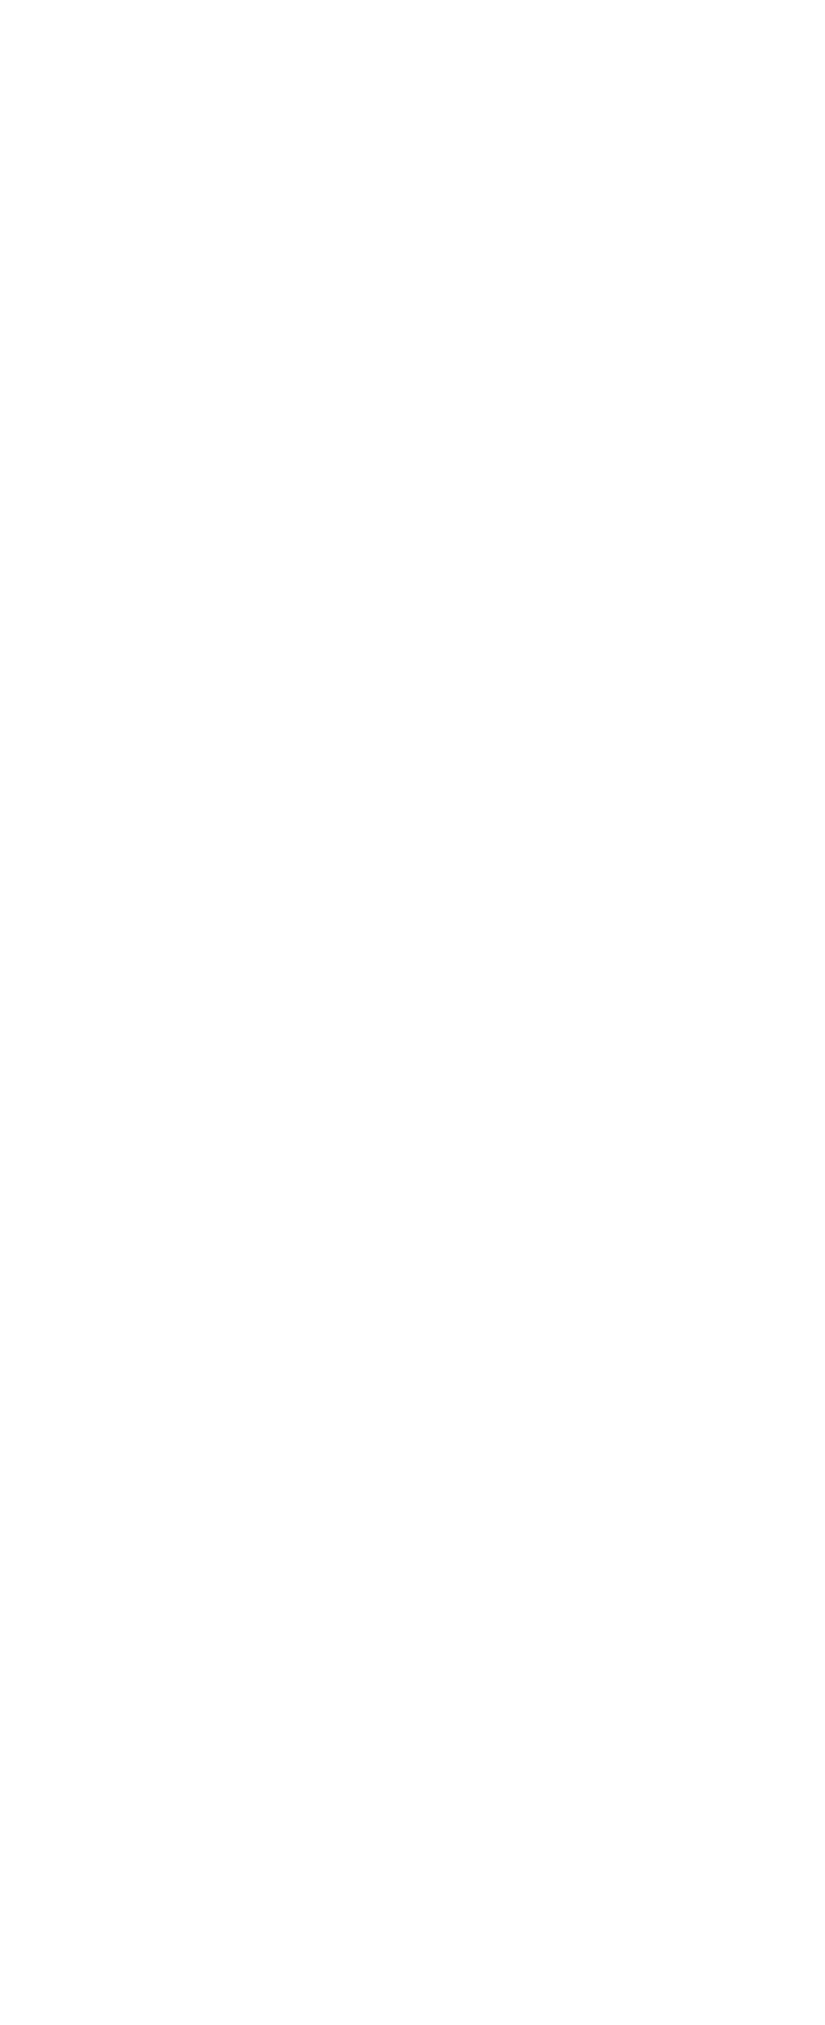 team fanroo